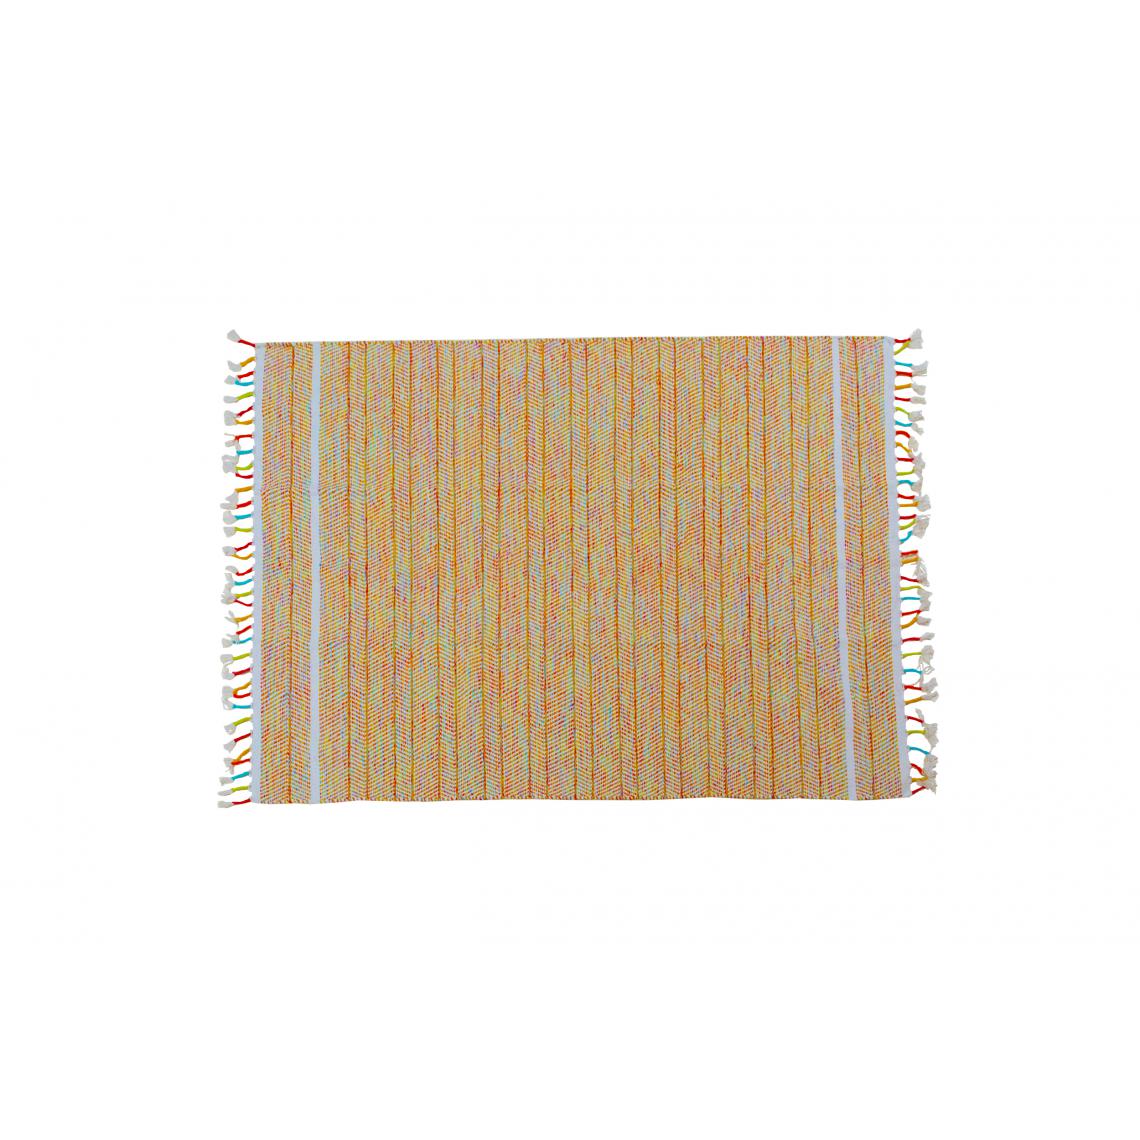 Alter - Tapis moderne Alabama, style kilim, 100% coton, multicolore, 110x60cm - Tapis